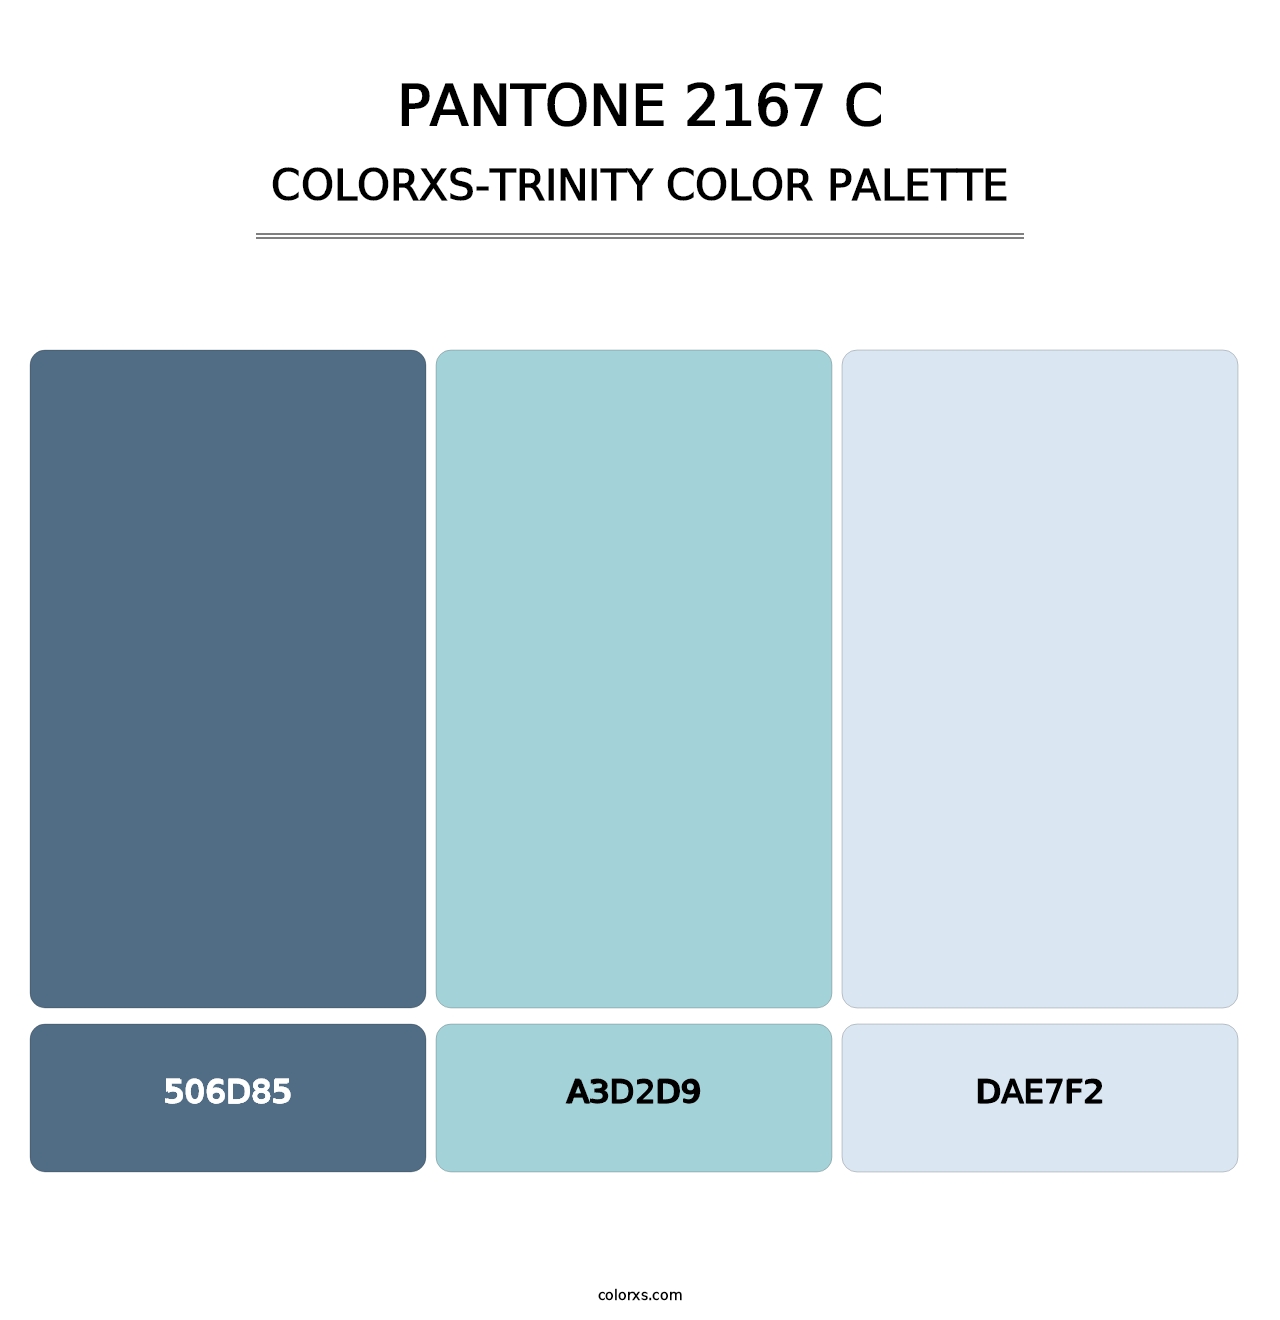 PANTONE 2167 C - Colorxs Trinity Palette